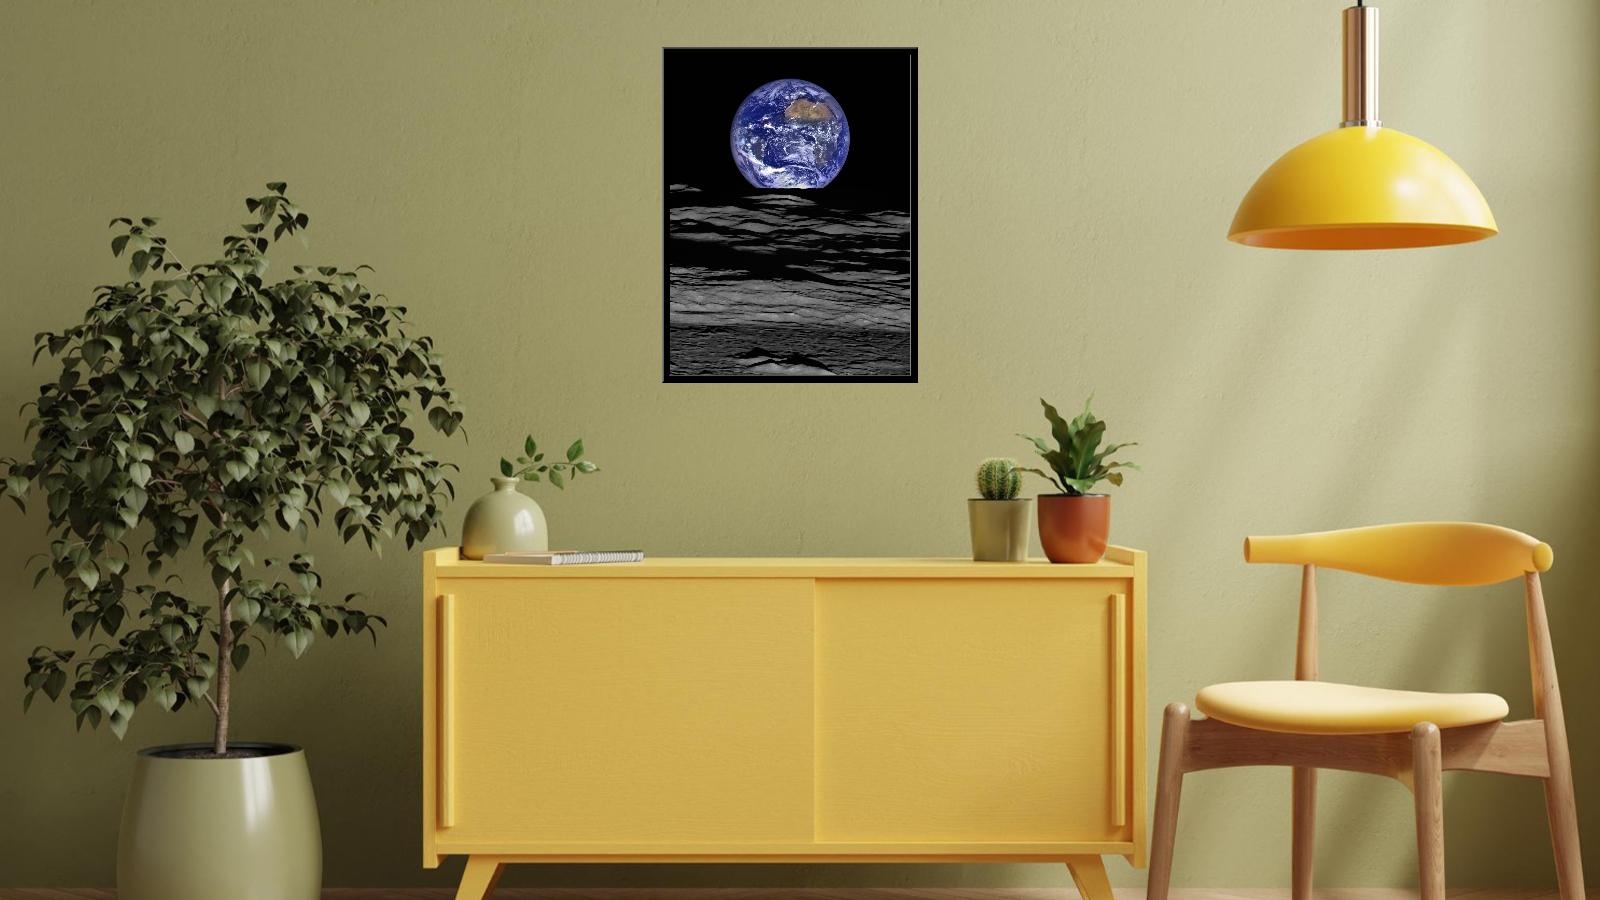 Earthrise on the Moon